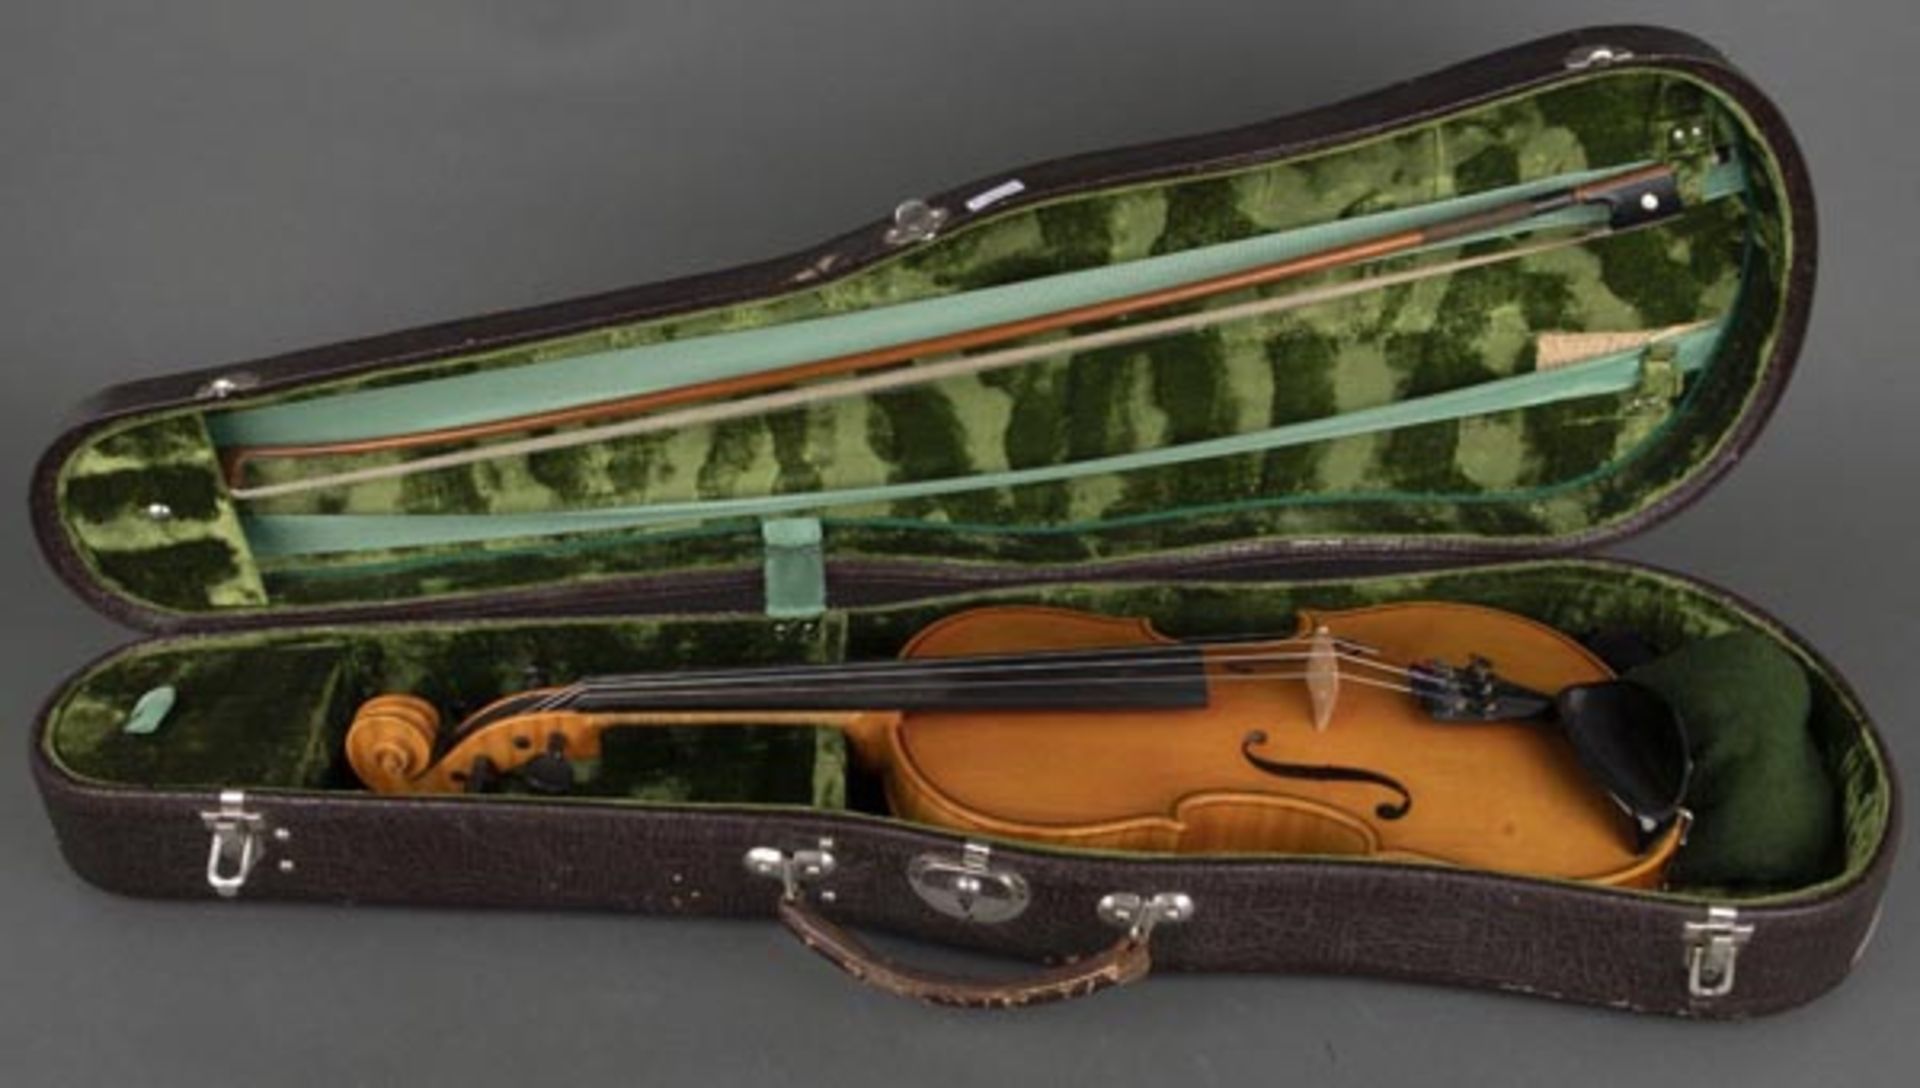 Violine mit Original-Etikett GEWA-Mittenwald 1974, mit Bogen im Kasten, L=59 cm. (gut erhalten)